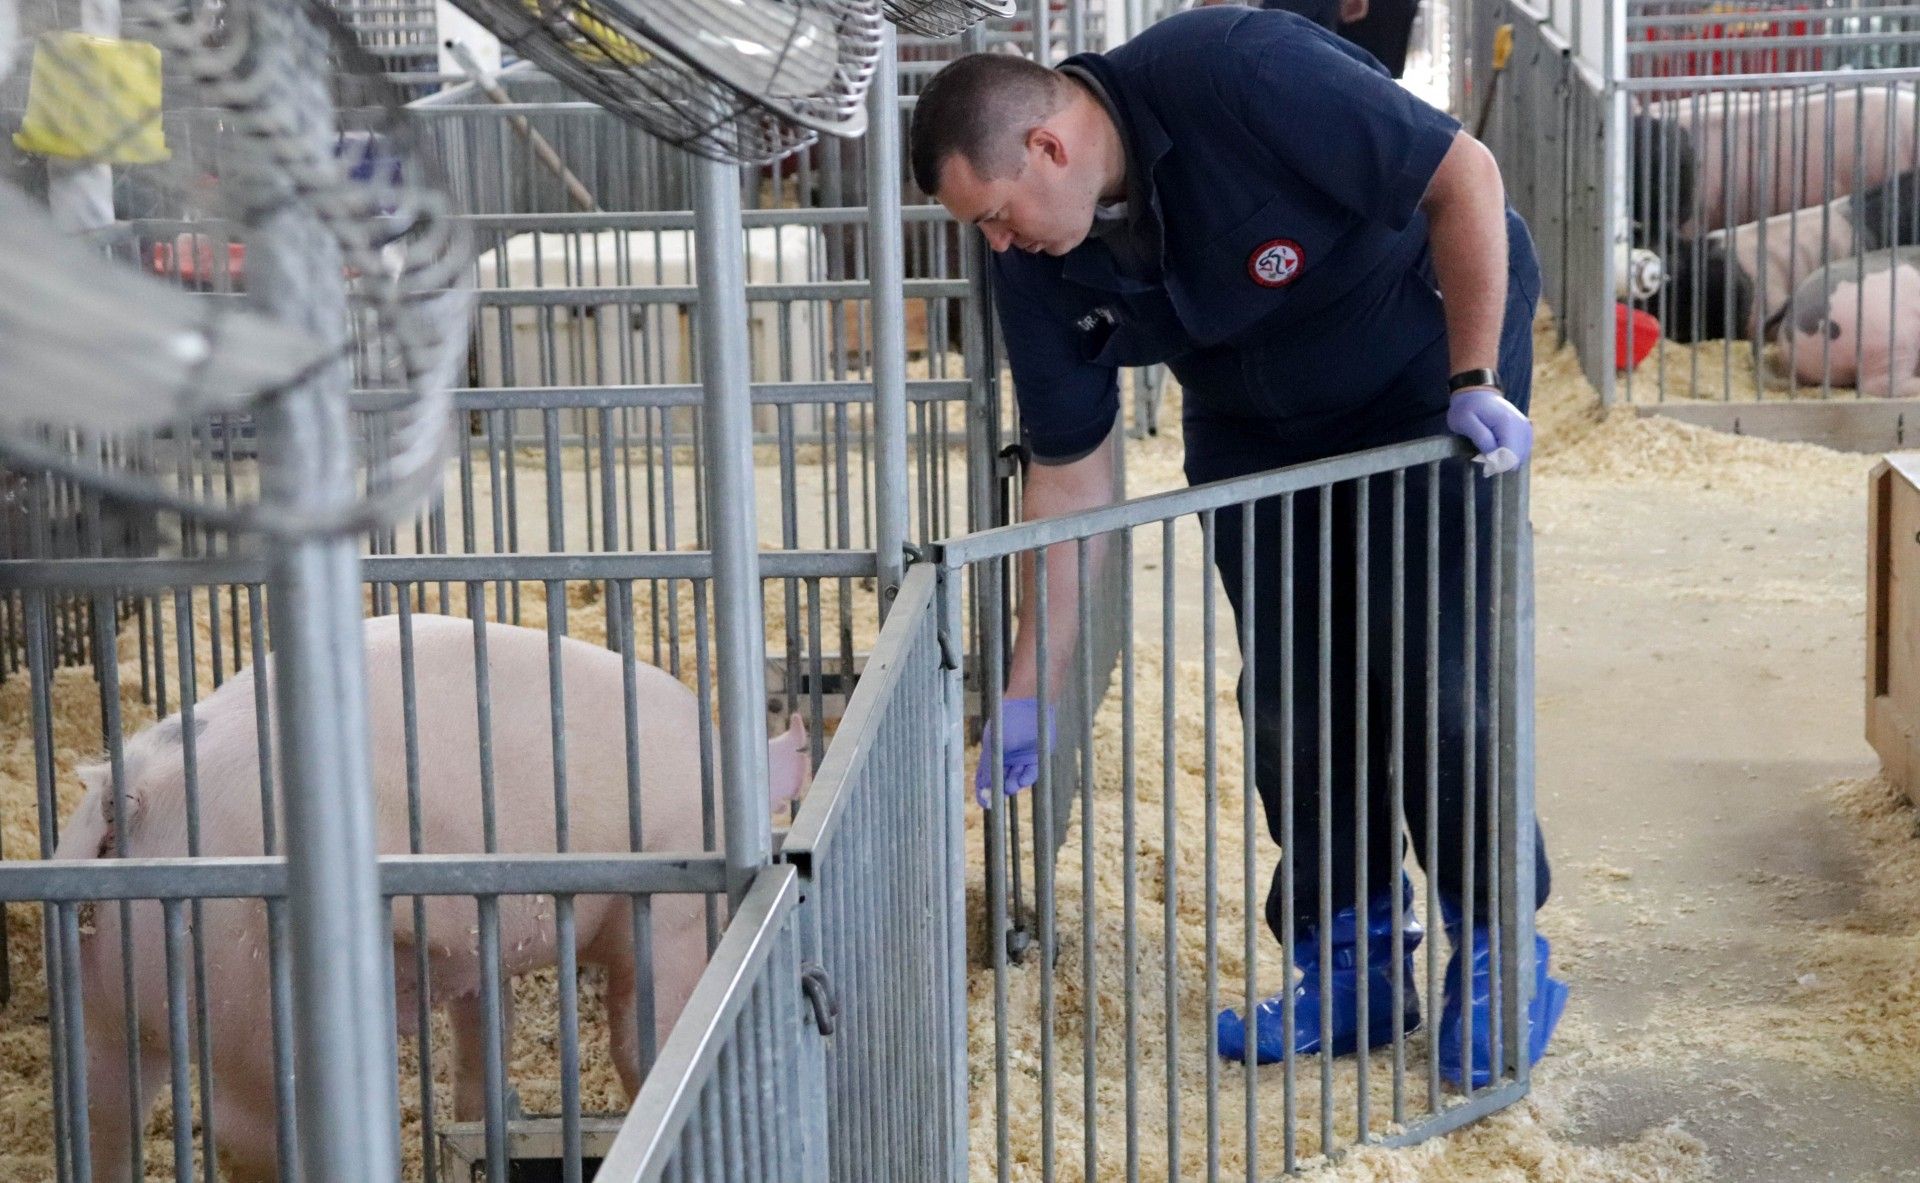 Ohio State Associate Professor of Veterinary Preventive Medicine Andrew Bowman examines a pig.